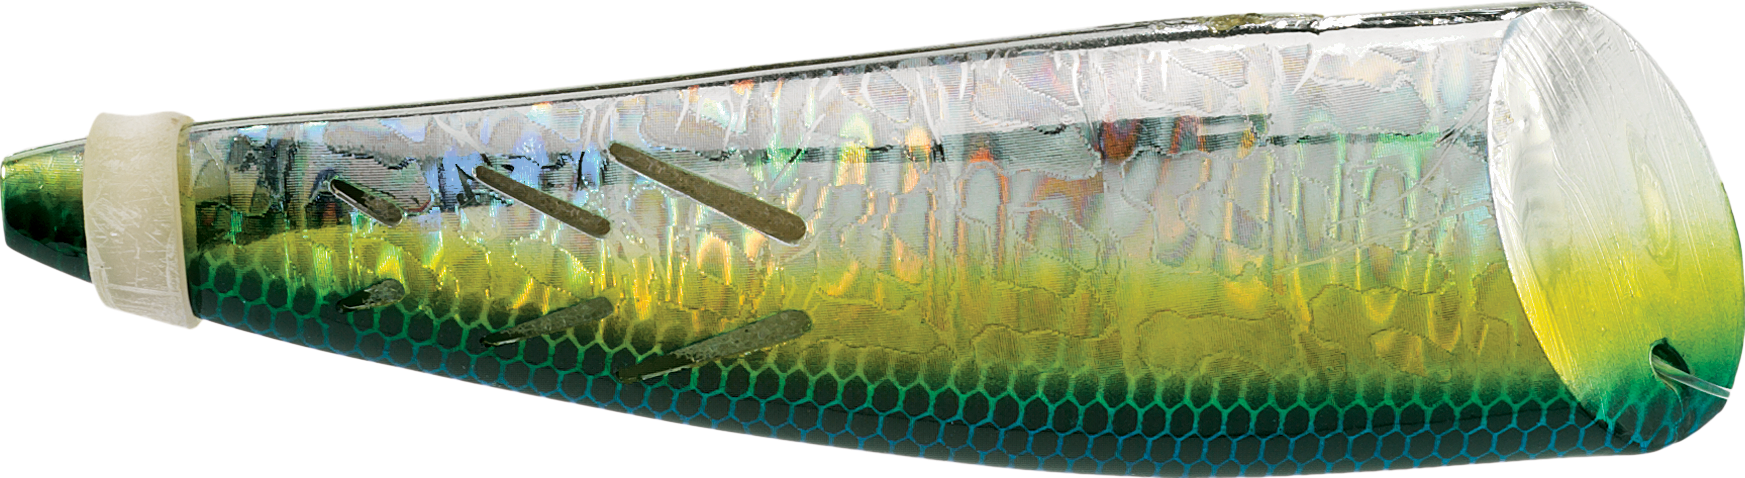 BRADS Super Bait Kokanee Cut Plug BABOOM UV Rigged Salmon Fish